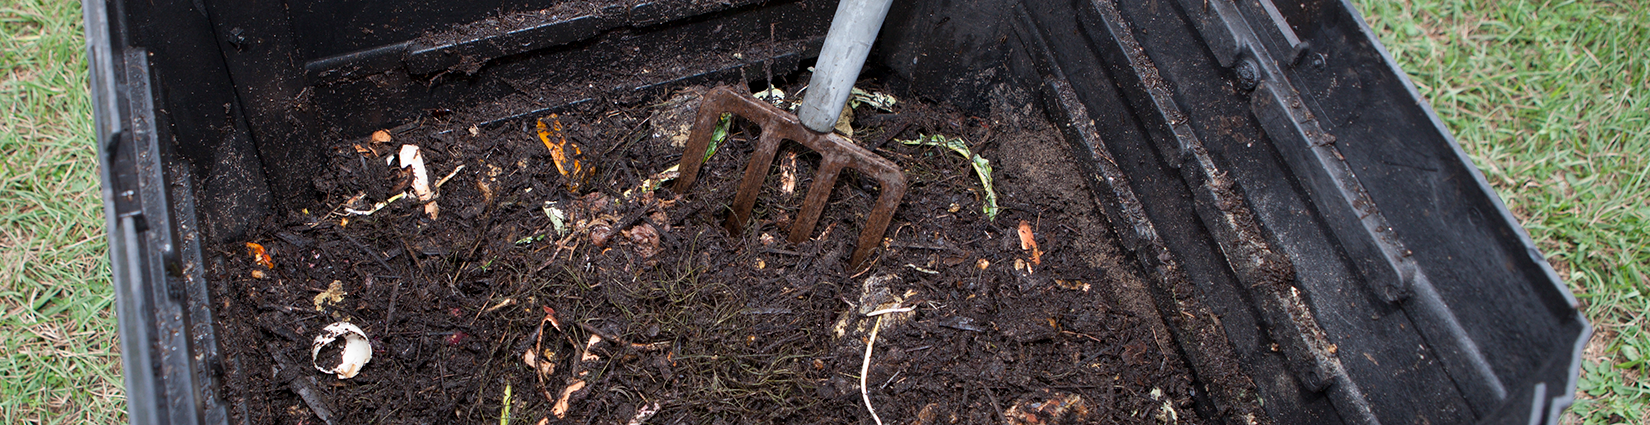 compost bin with pitchfork